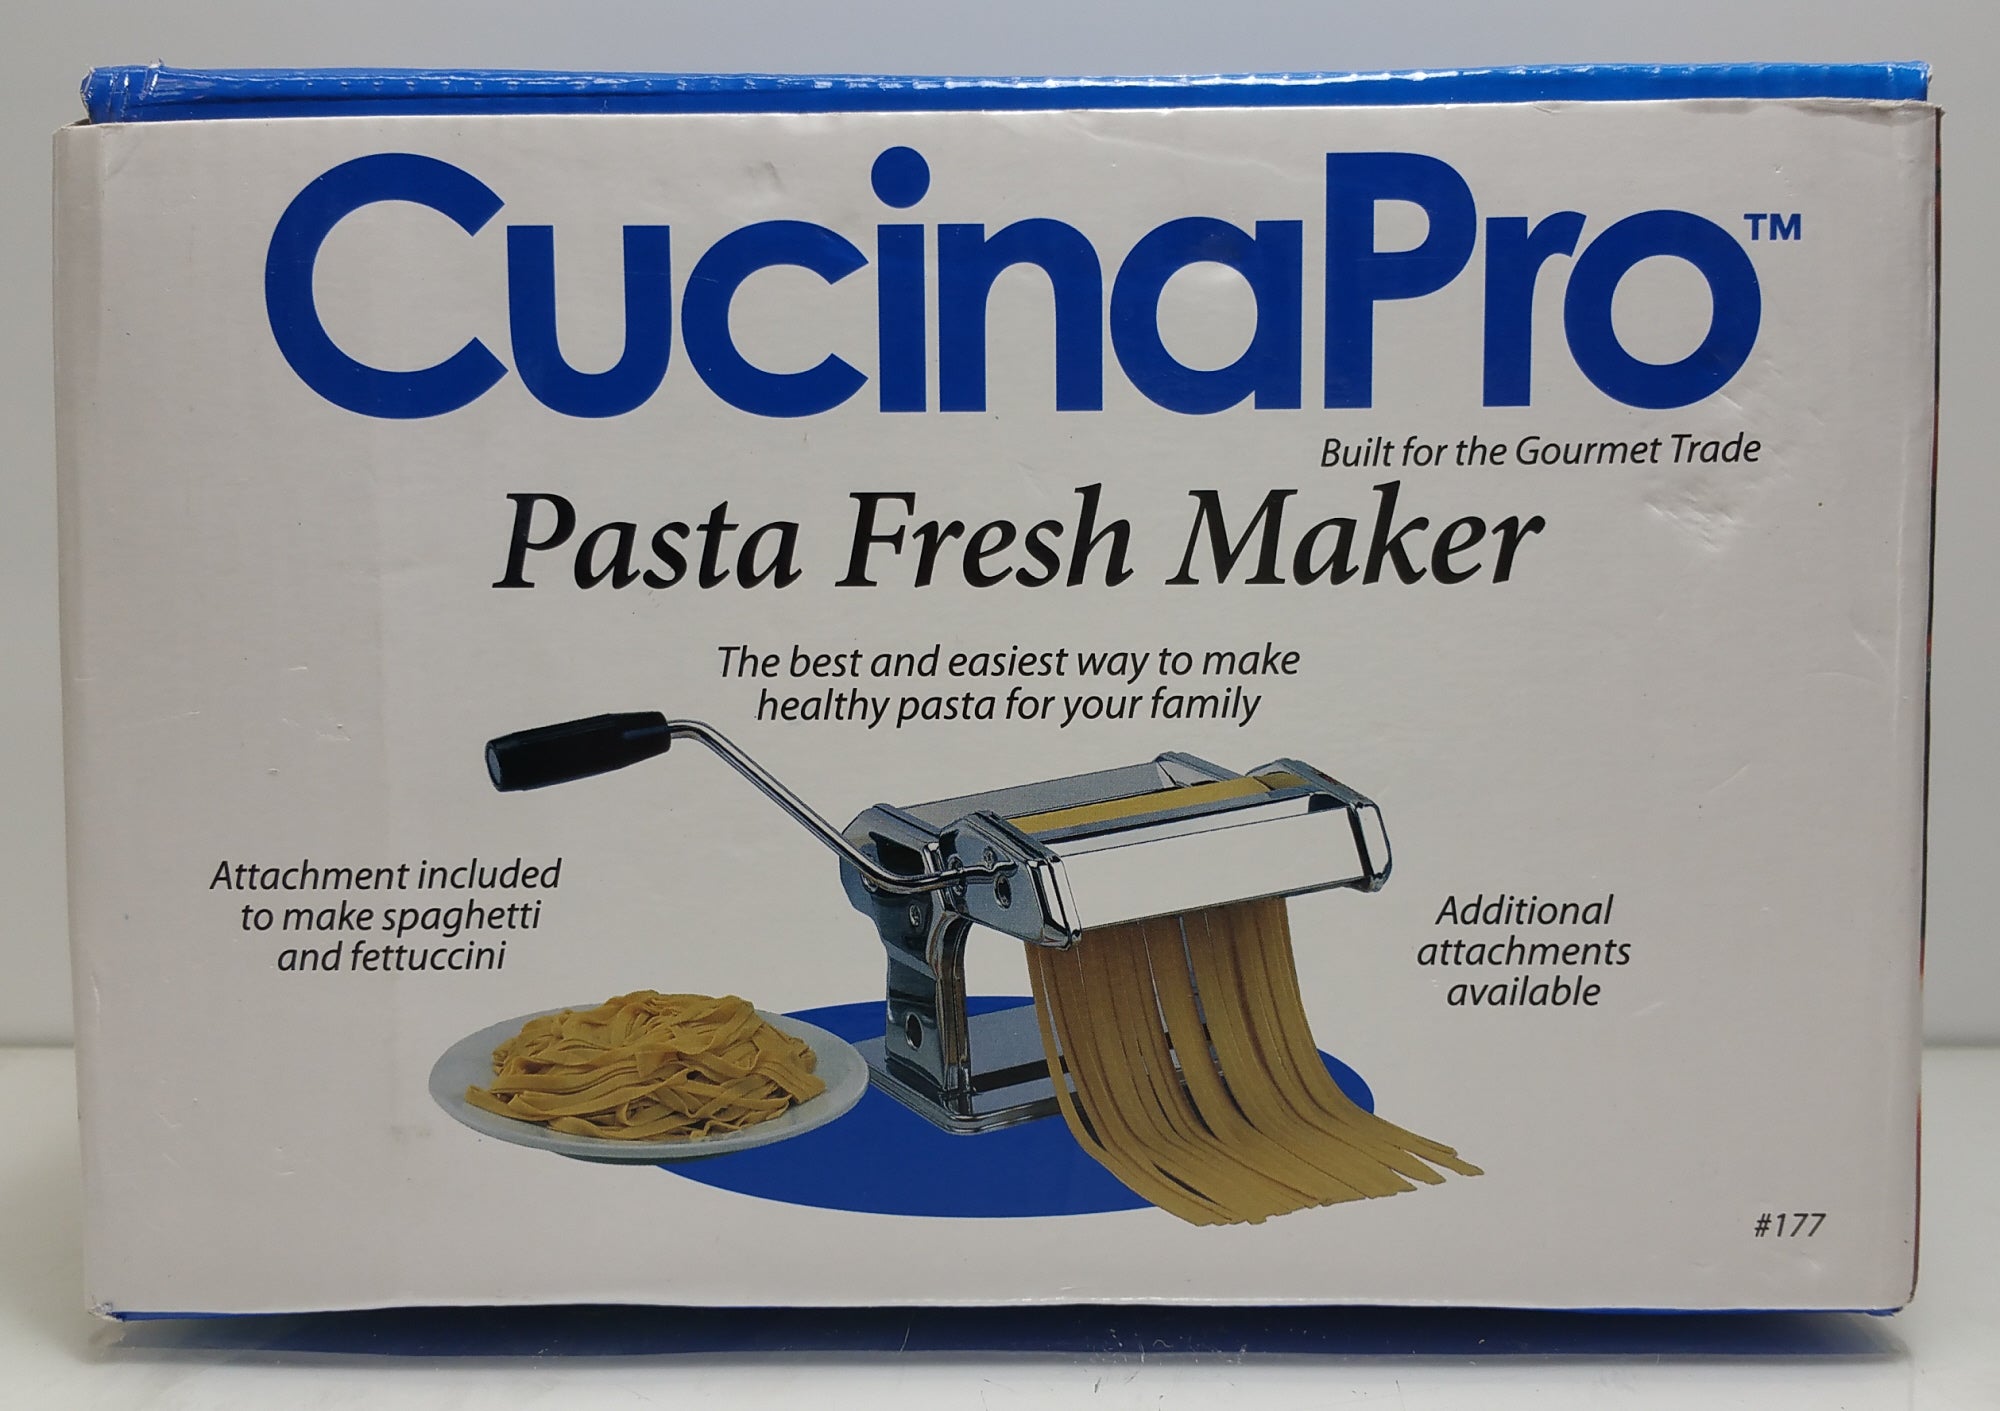 Cucinapro Pasta Fresh Pasta Maker